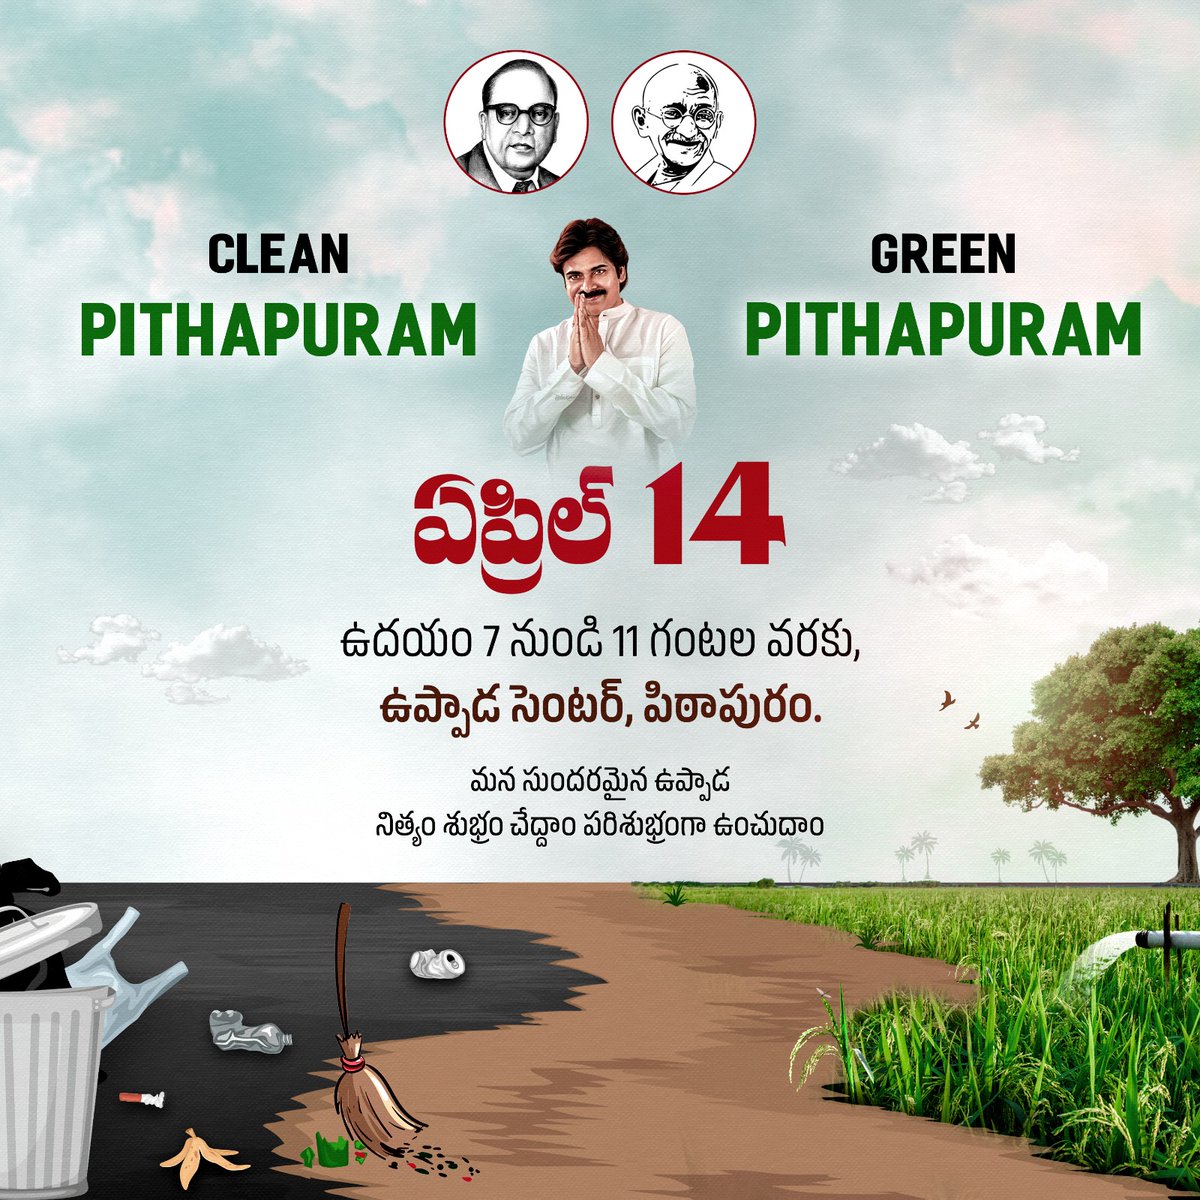 'Clean Pithapuram - Green Pithapuram' • మన సుందరమైన ఉప్పాడ నిత్యం శుభ్రం చేద్దాం పరిశుభ్రంగా ఉంచుదాం.. • ఏప్రిల్ 14 ఉదయం 7 నుండి 11 గంటల వరకు, ఉప్పాడ సెంటర్, పిఠాపురం. #CleanPithapuramGreenPithapuram